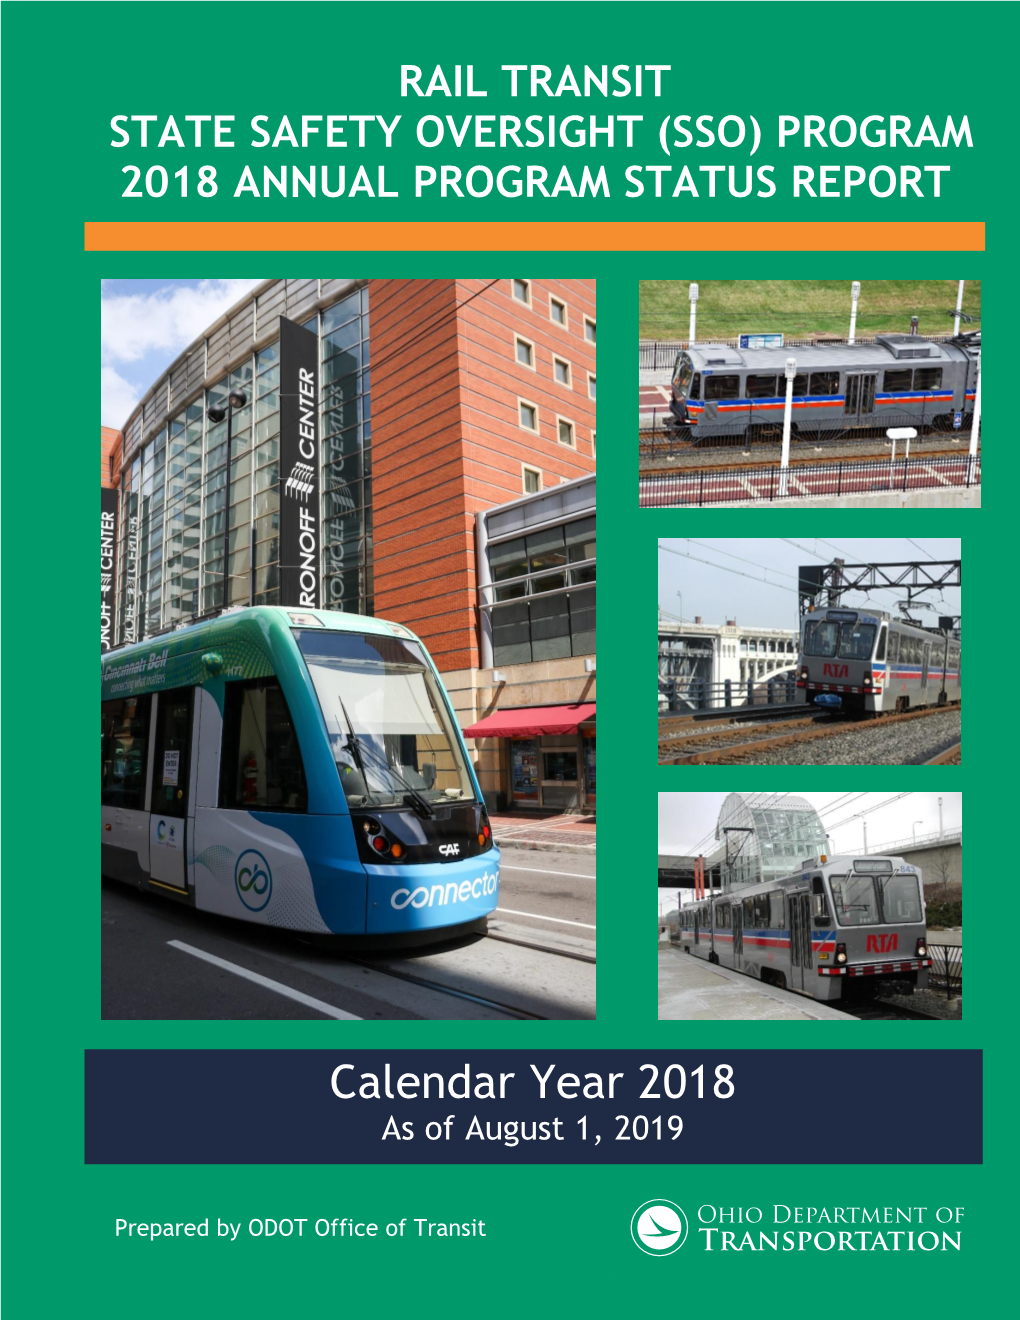 Calendar Year 2018 As of August 1, 2019